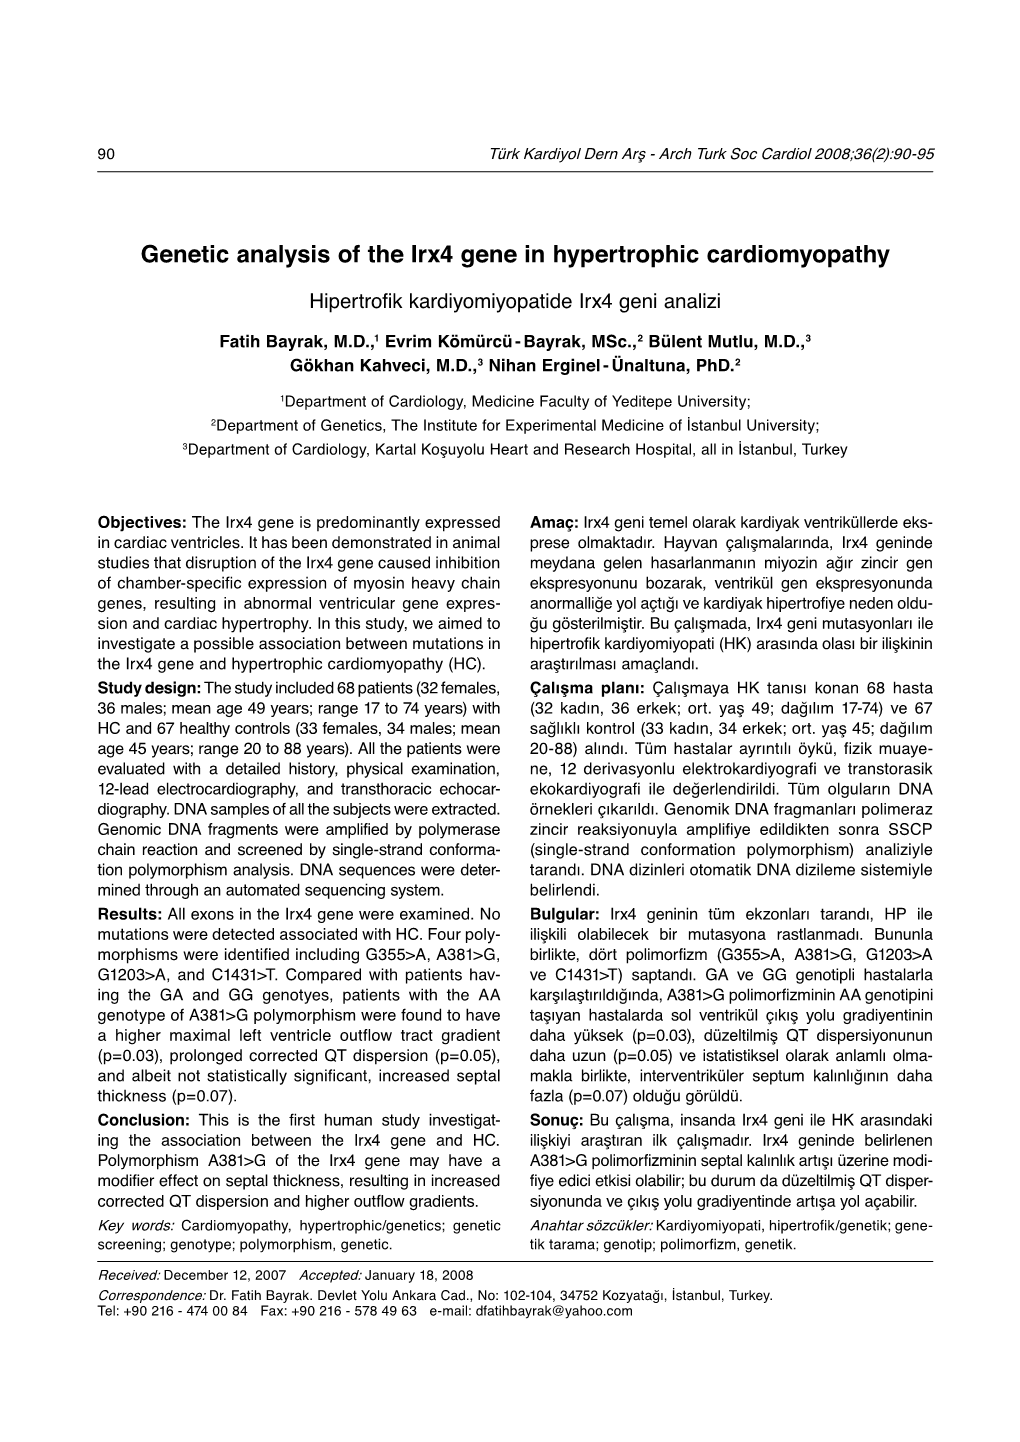 Genetic Analysis of the Irx4 Gene in Hypertrophic Cardiomyopathy